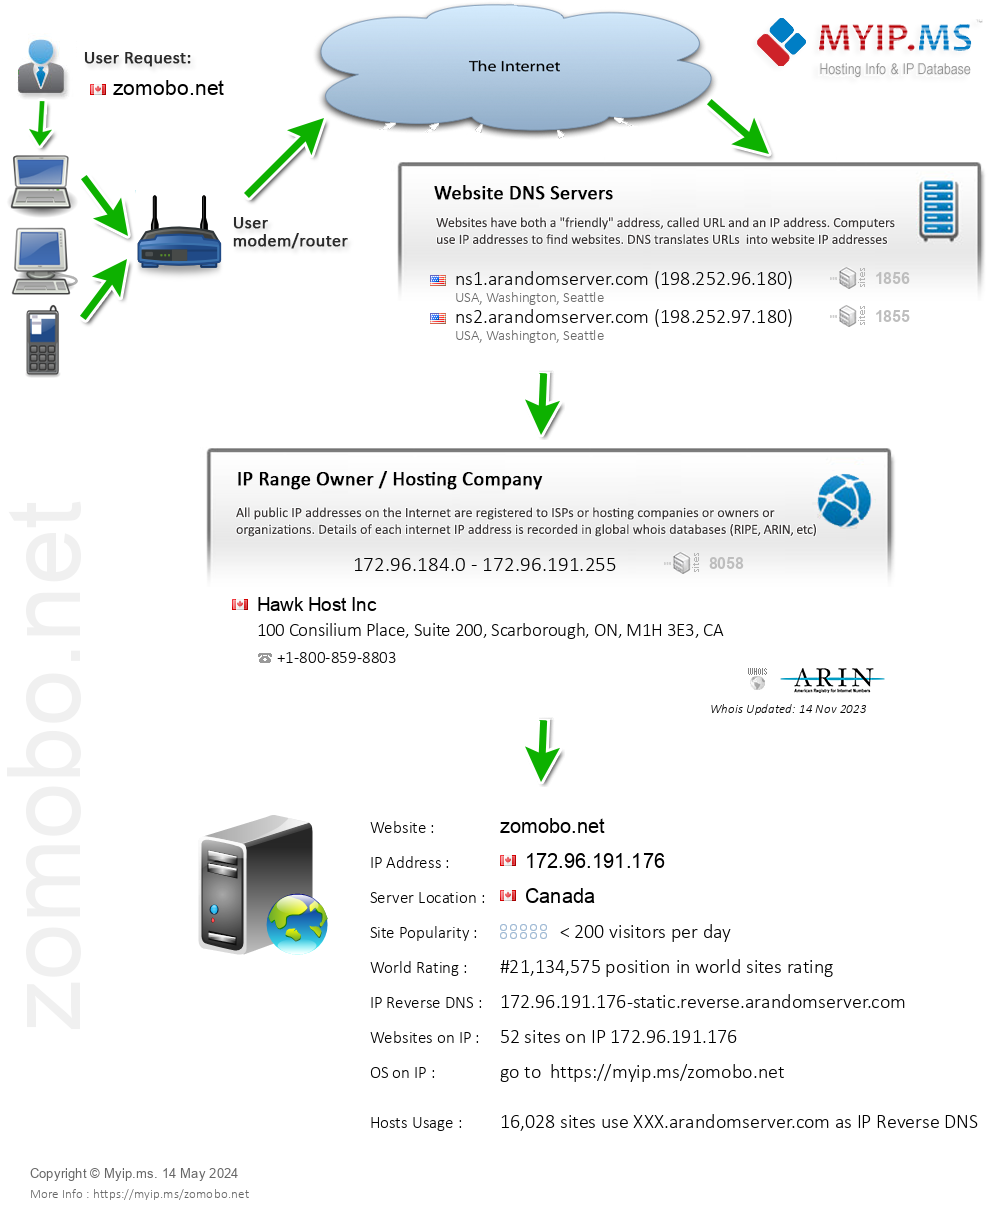 Zomobo.net - Website Hosting Visual IP Diagram